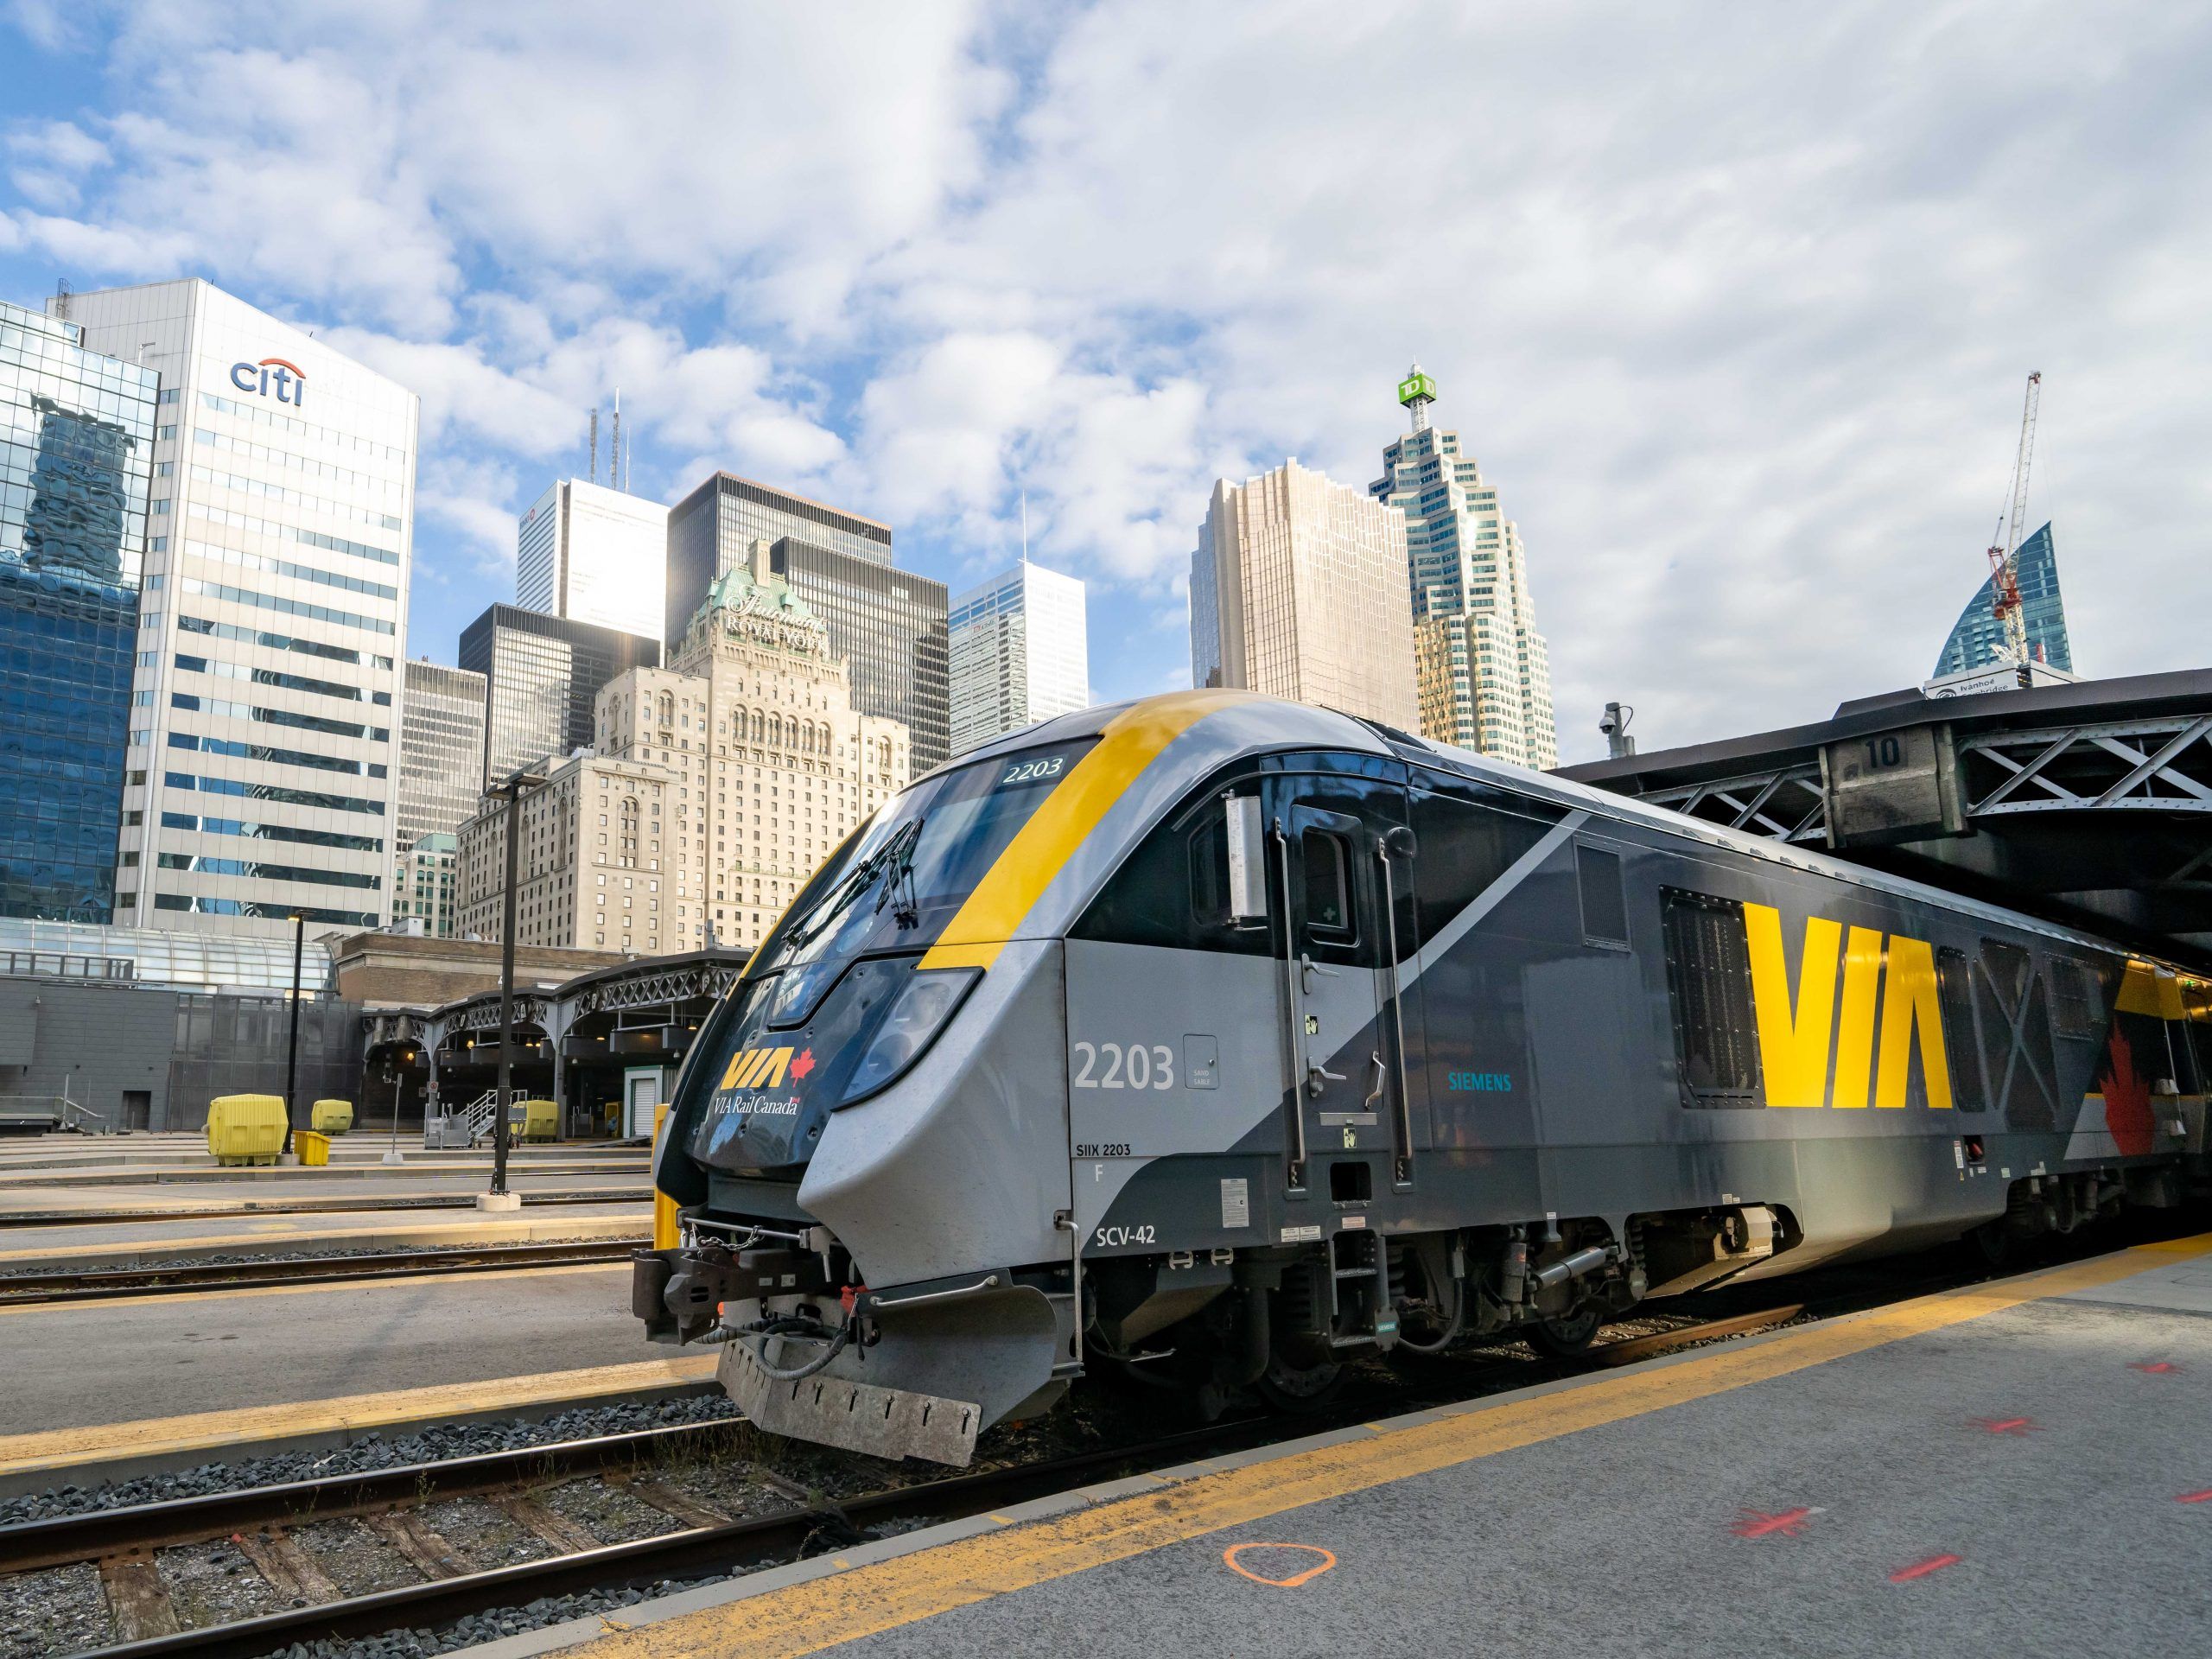 VIA Rail Train Trips Across Canada